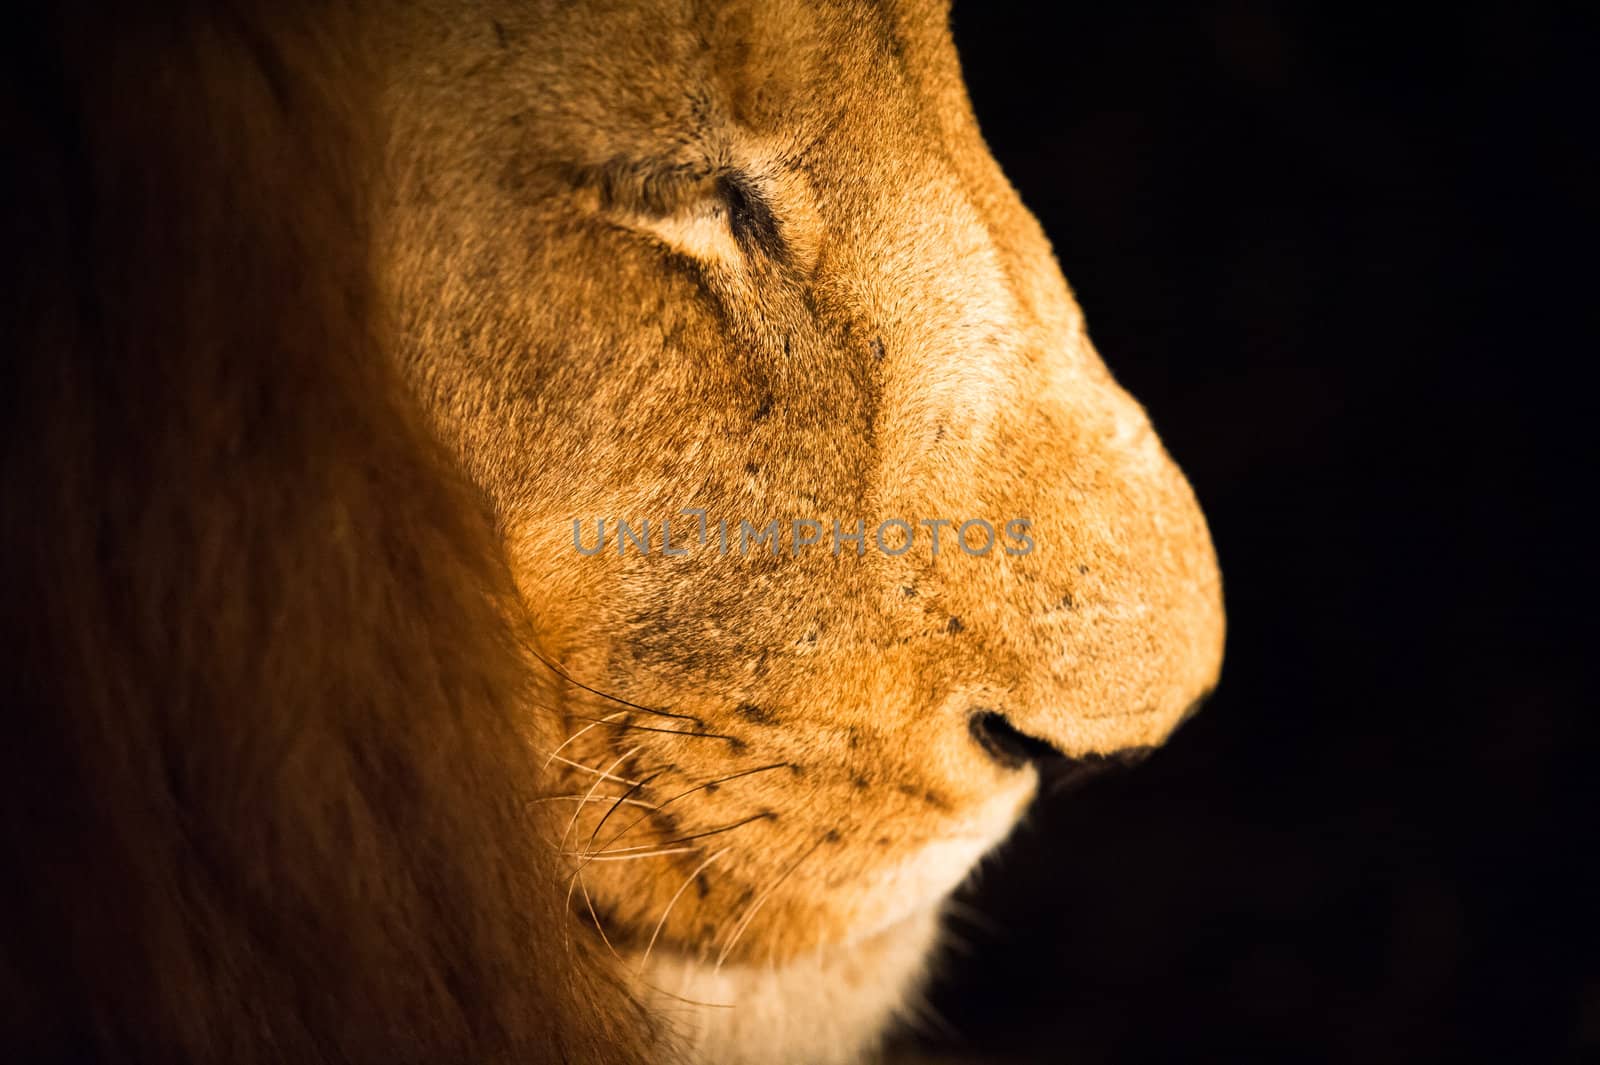 Male lion close up by edan